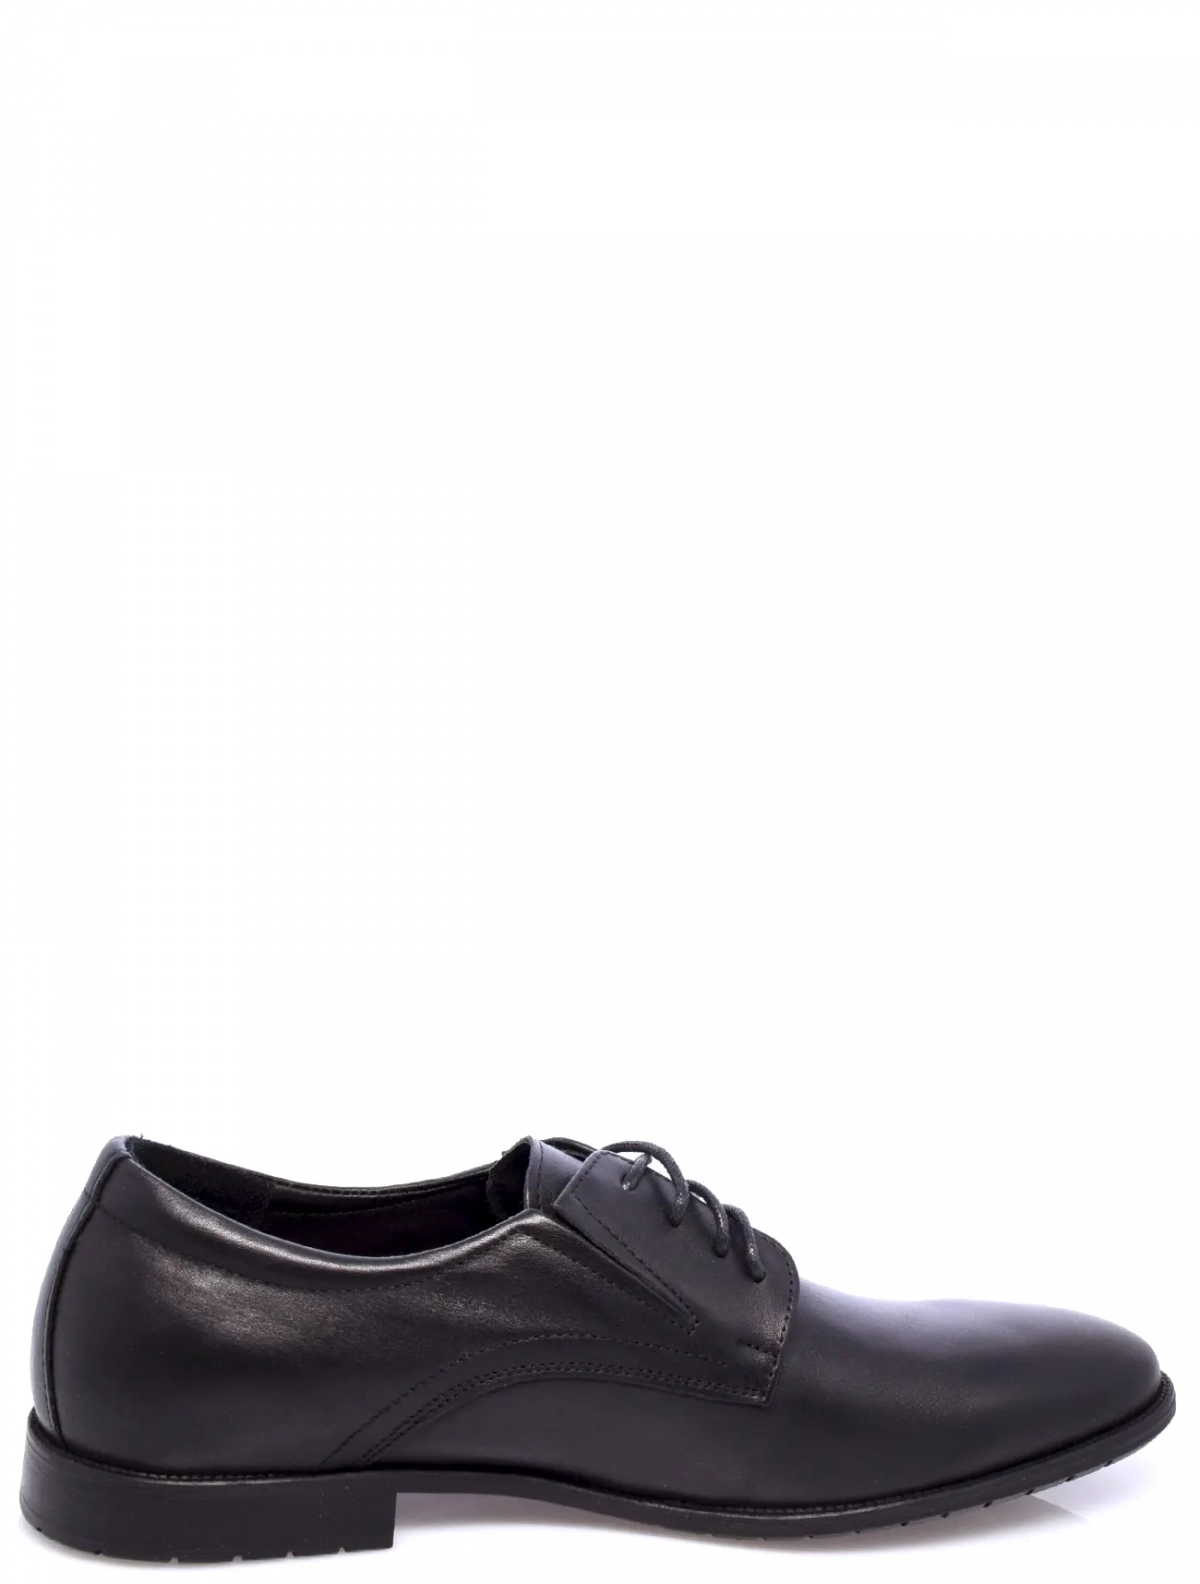 Bossner 5-354-107-1 мужские туфли